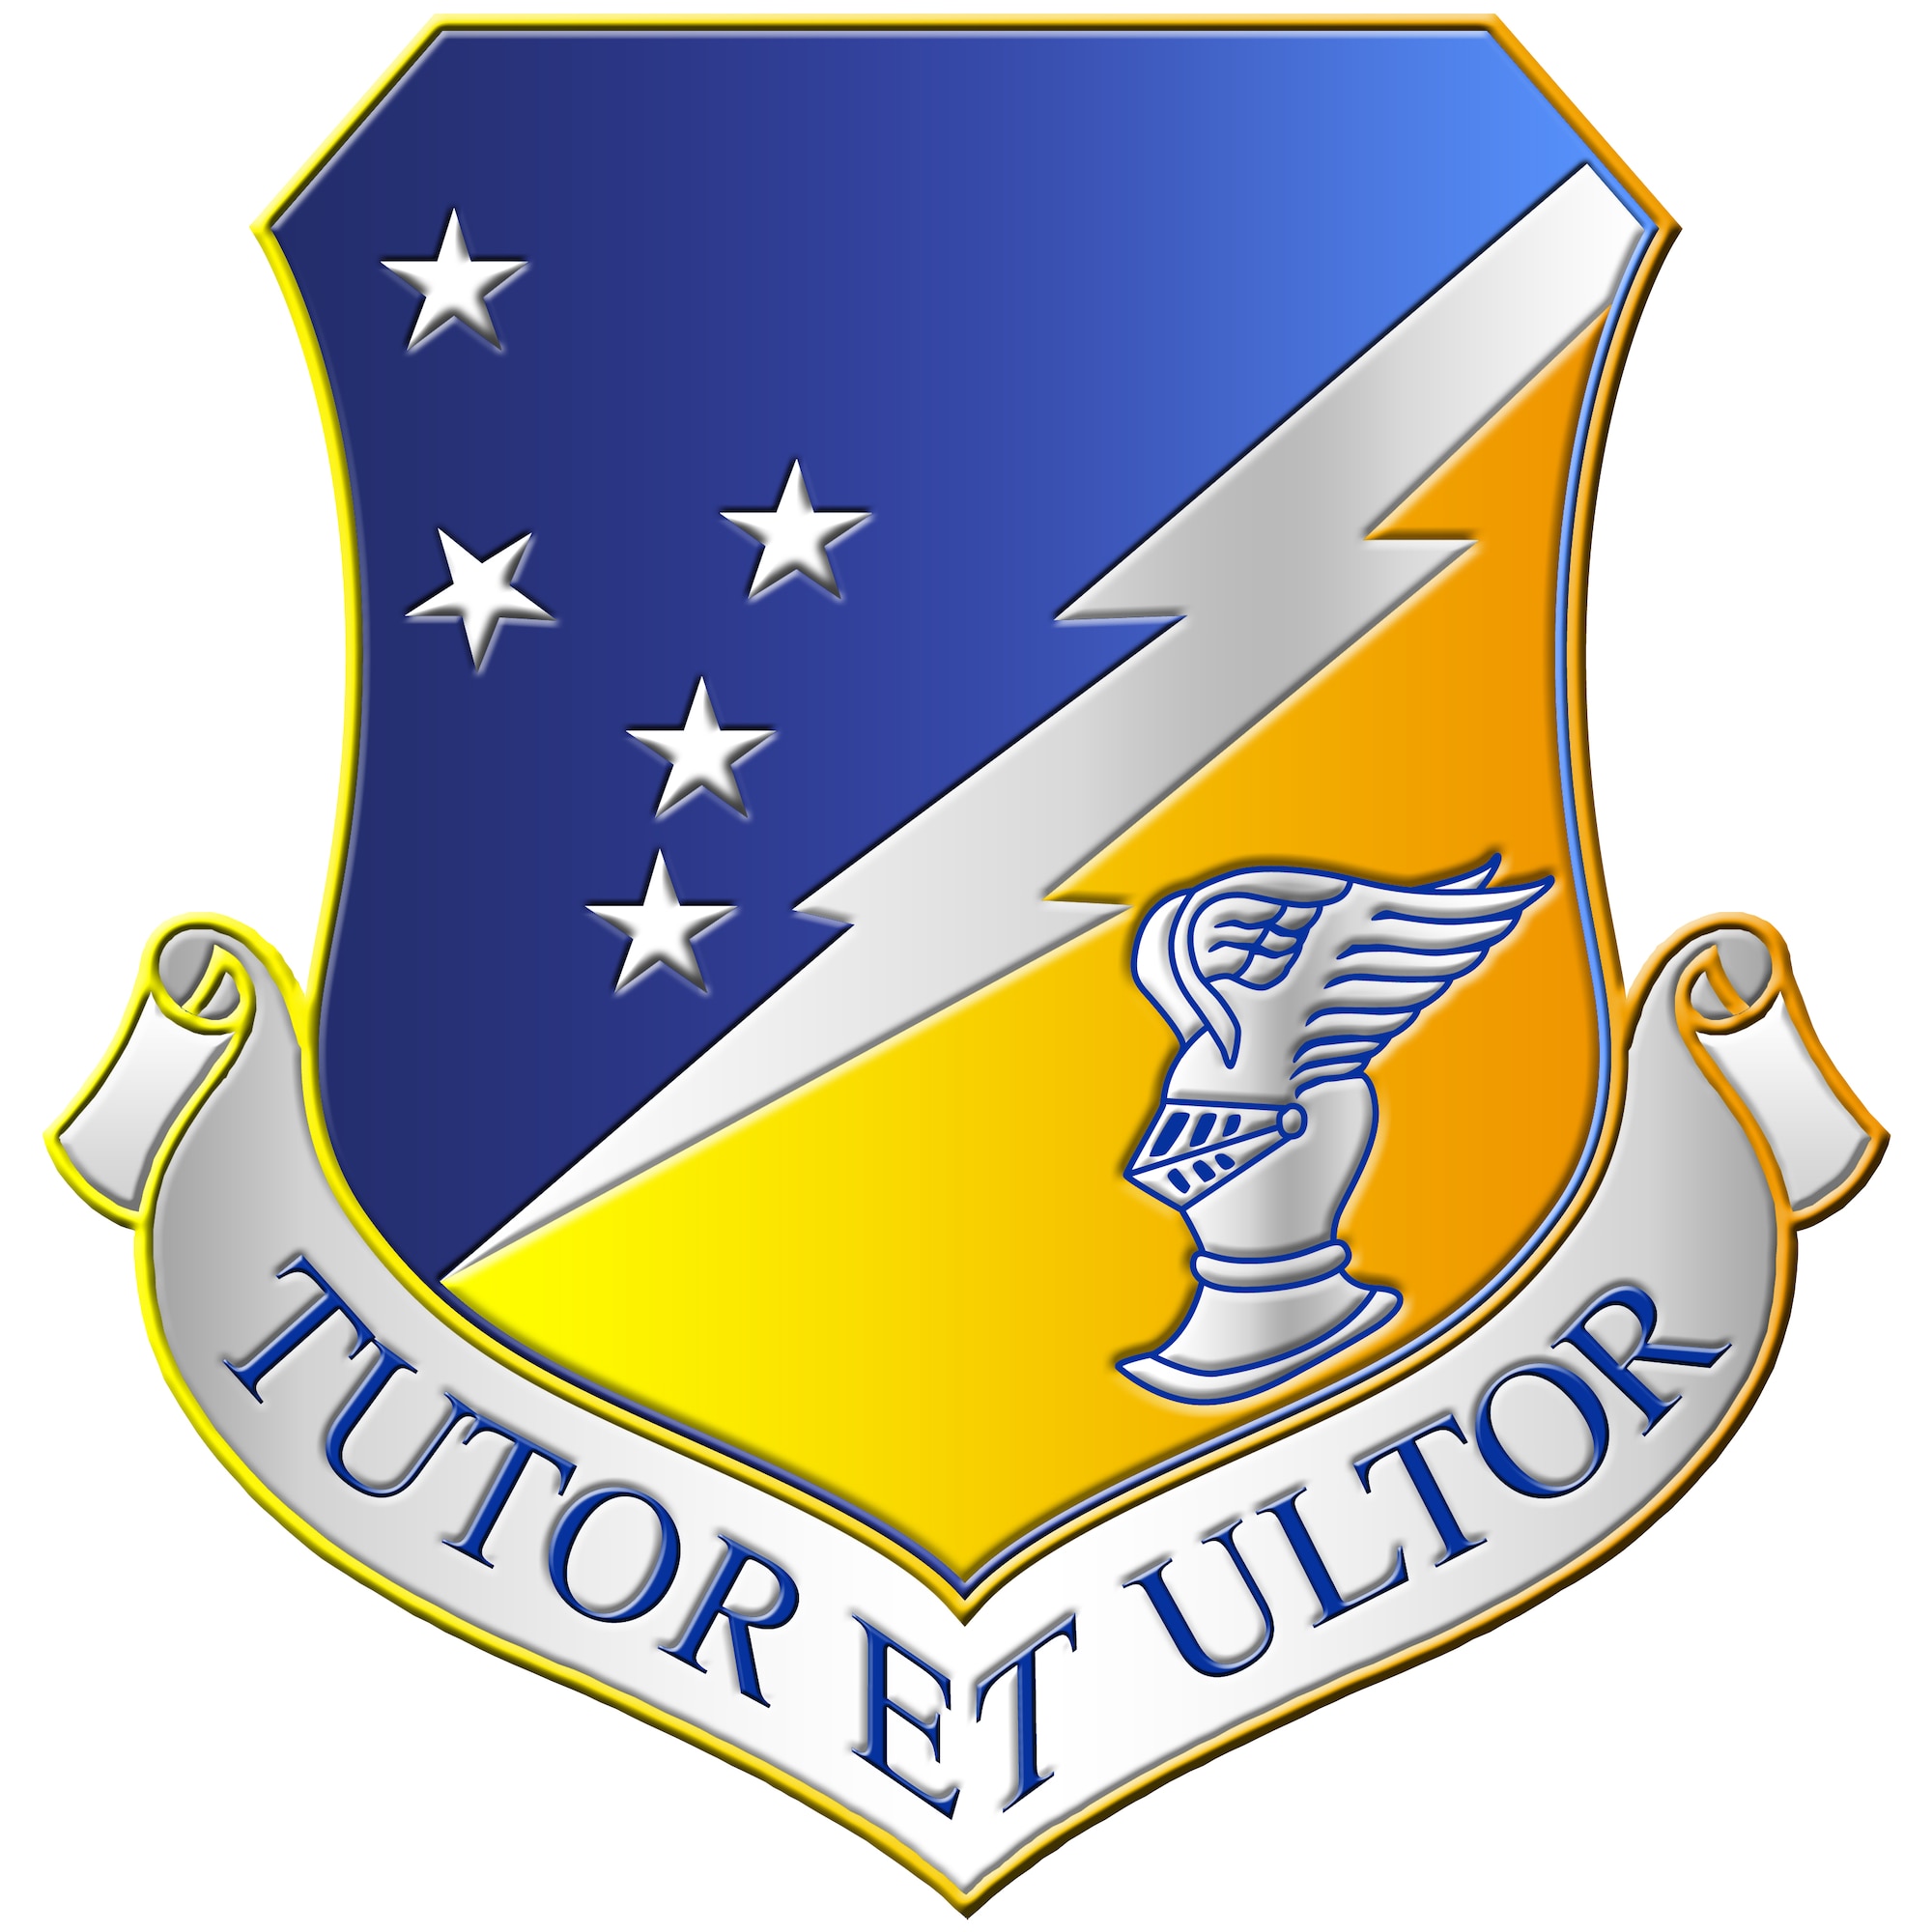 Tutor Et Ultor - one of the coolest mottos > Holloman Air Force Base ...